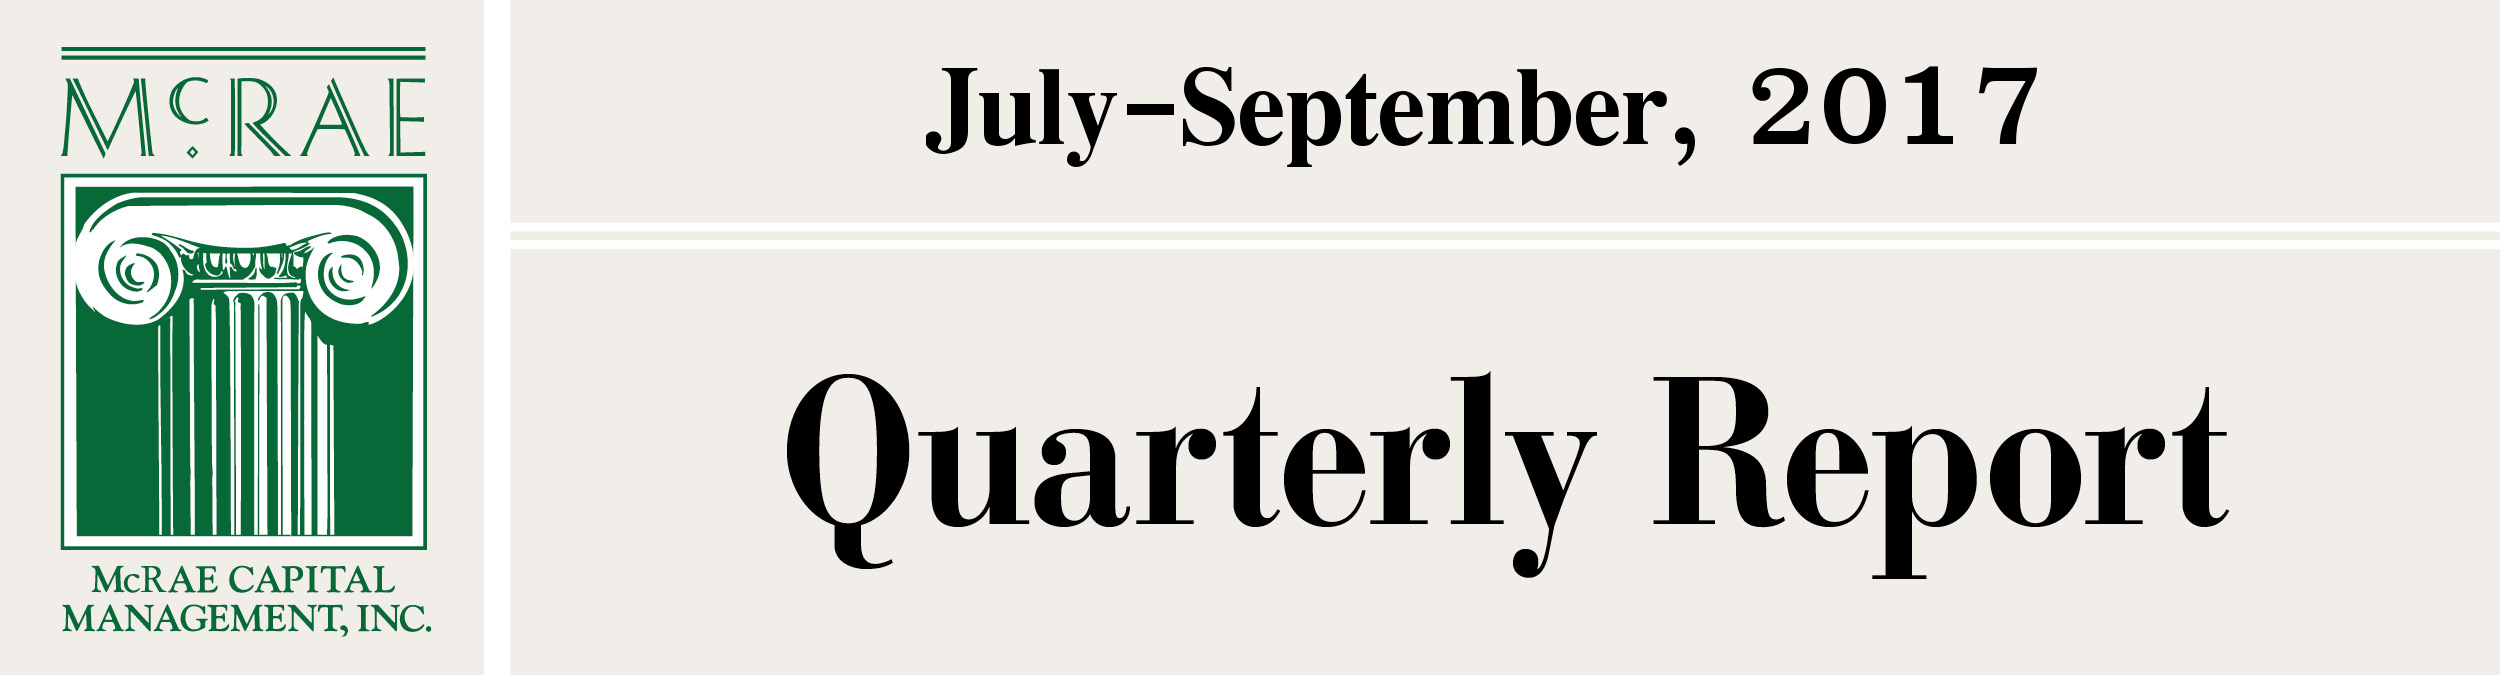 Quarterly Report for July through September 2017